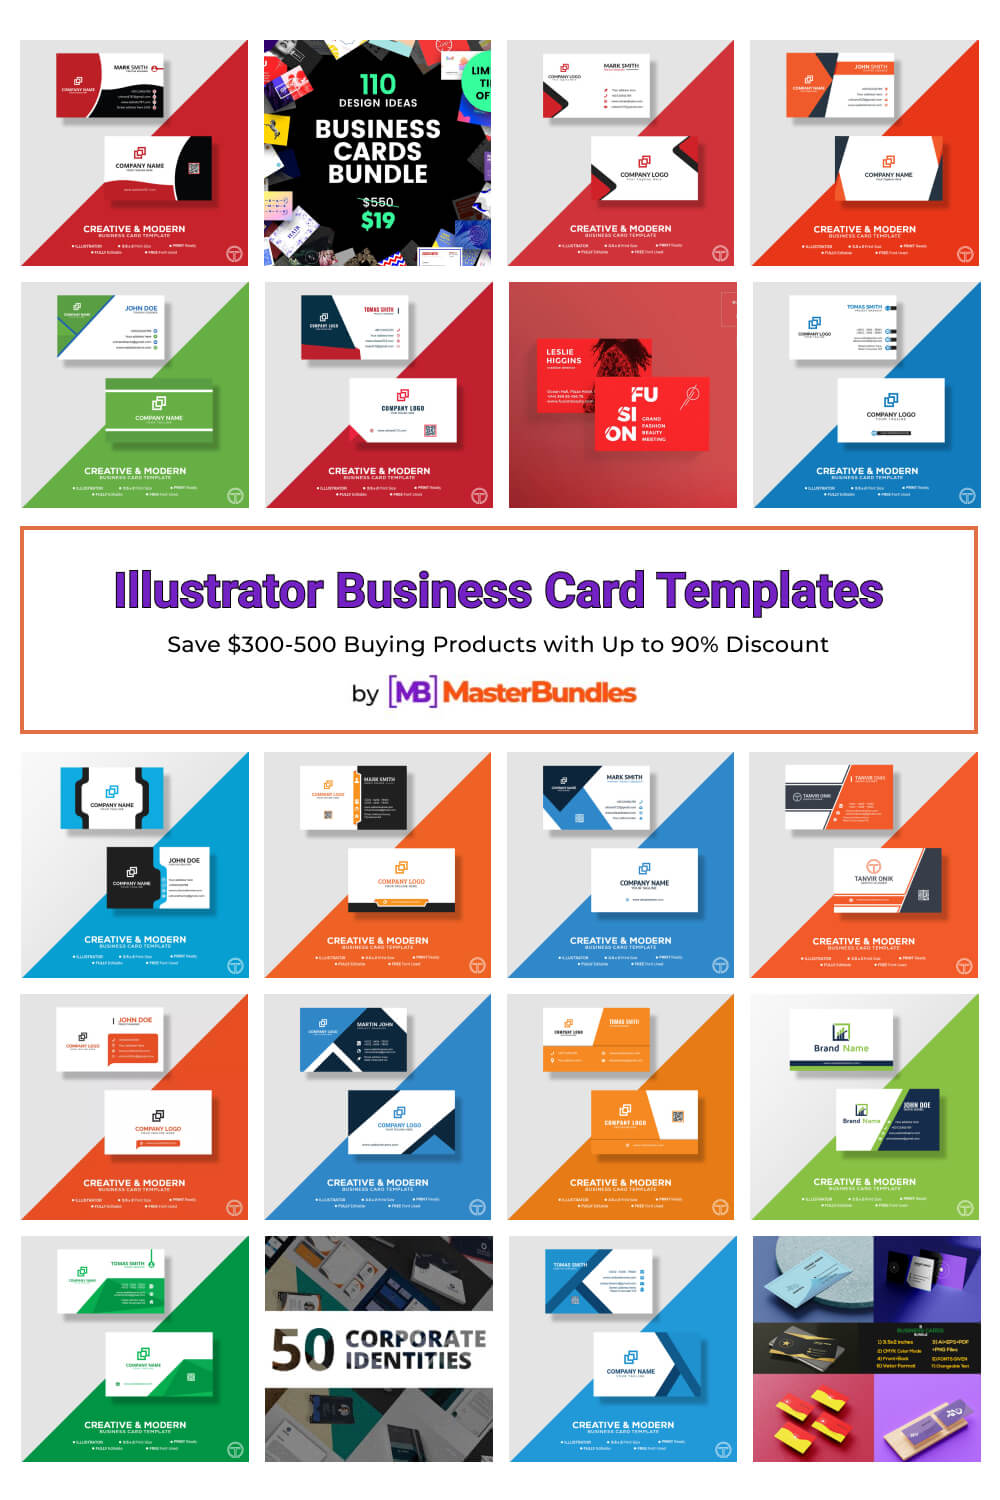 illustrator business card templates pinterest image.